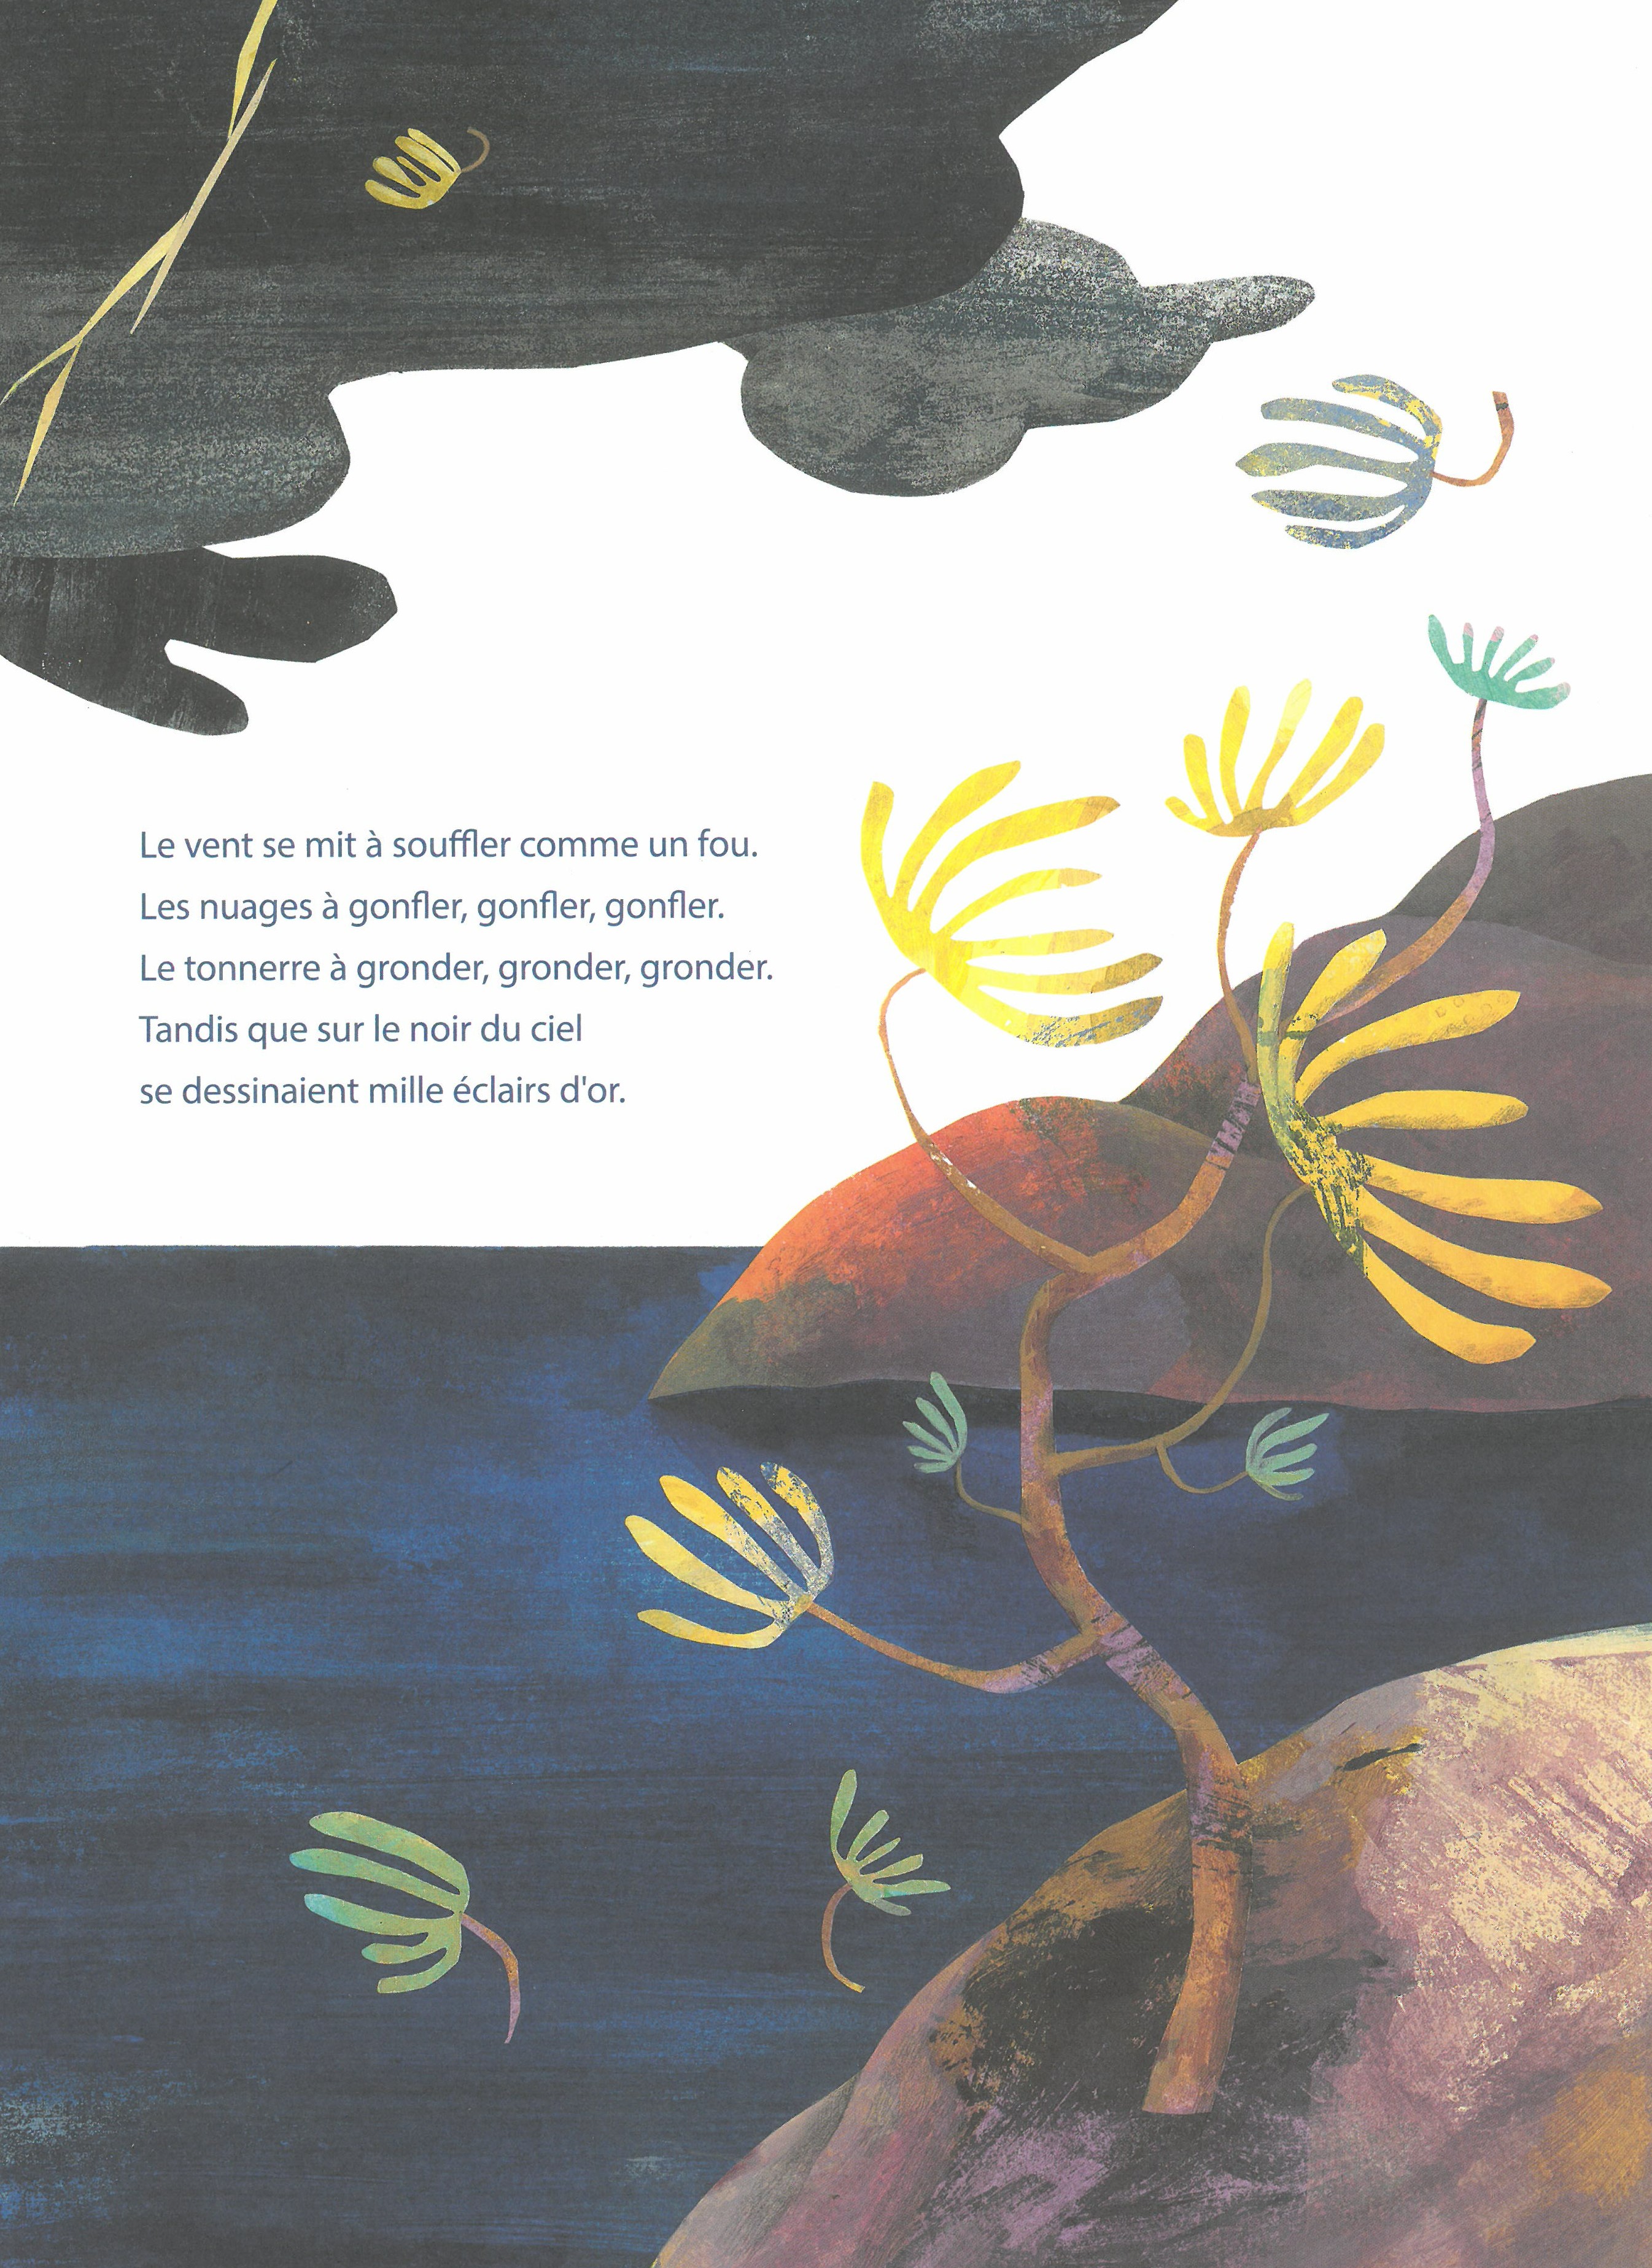 La Perruche Et La Sirene. Matisse